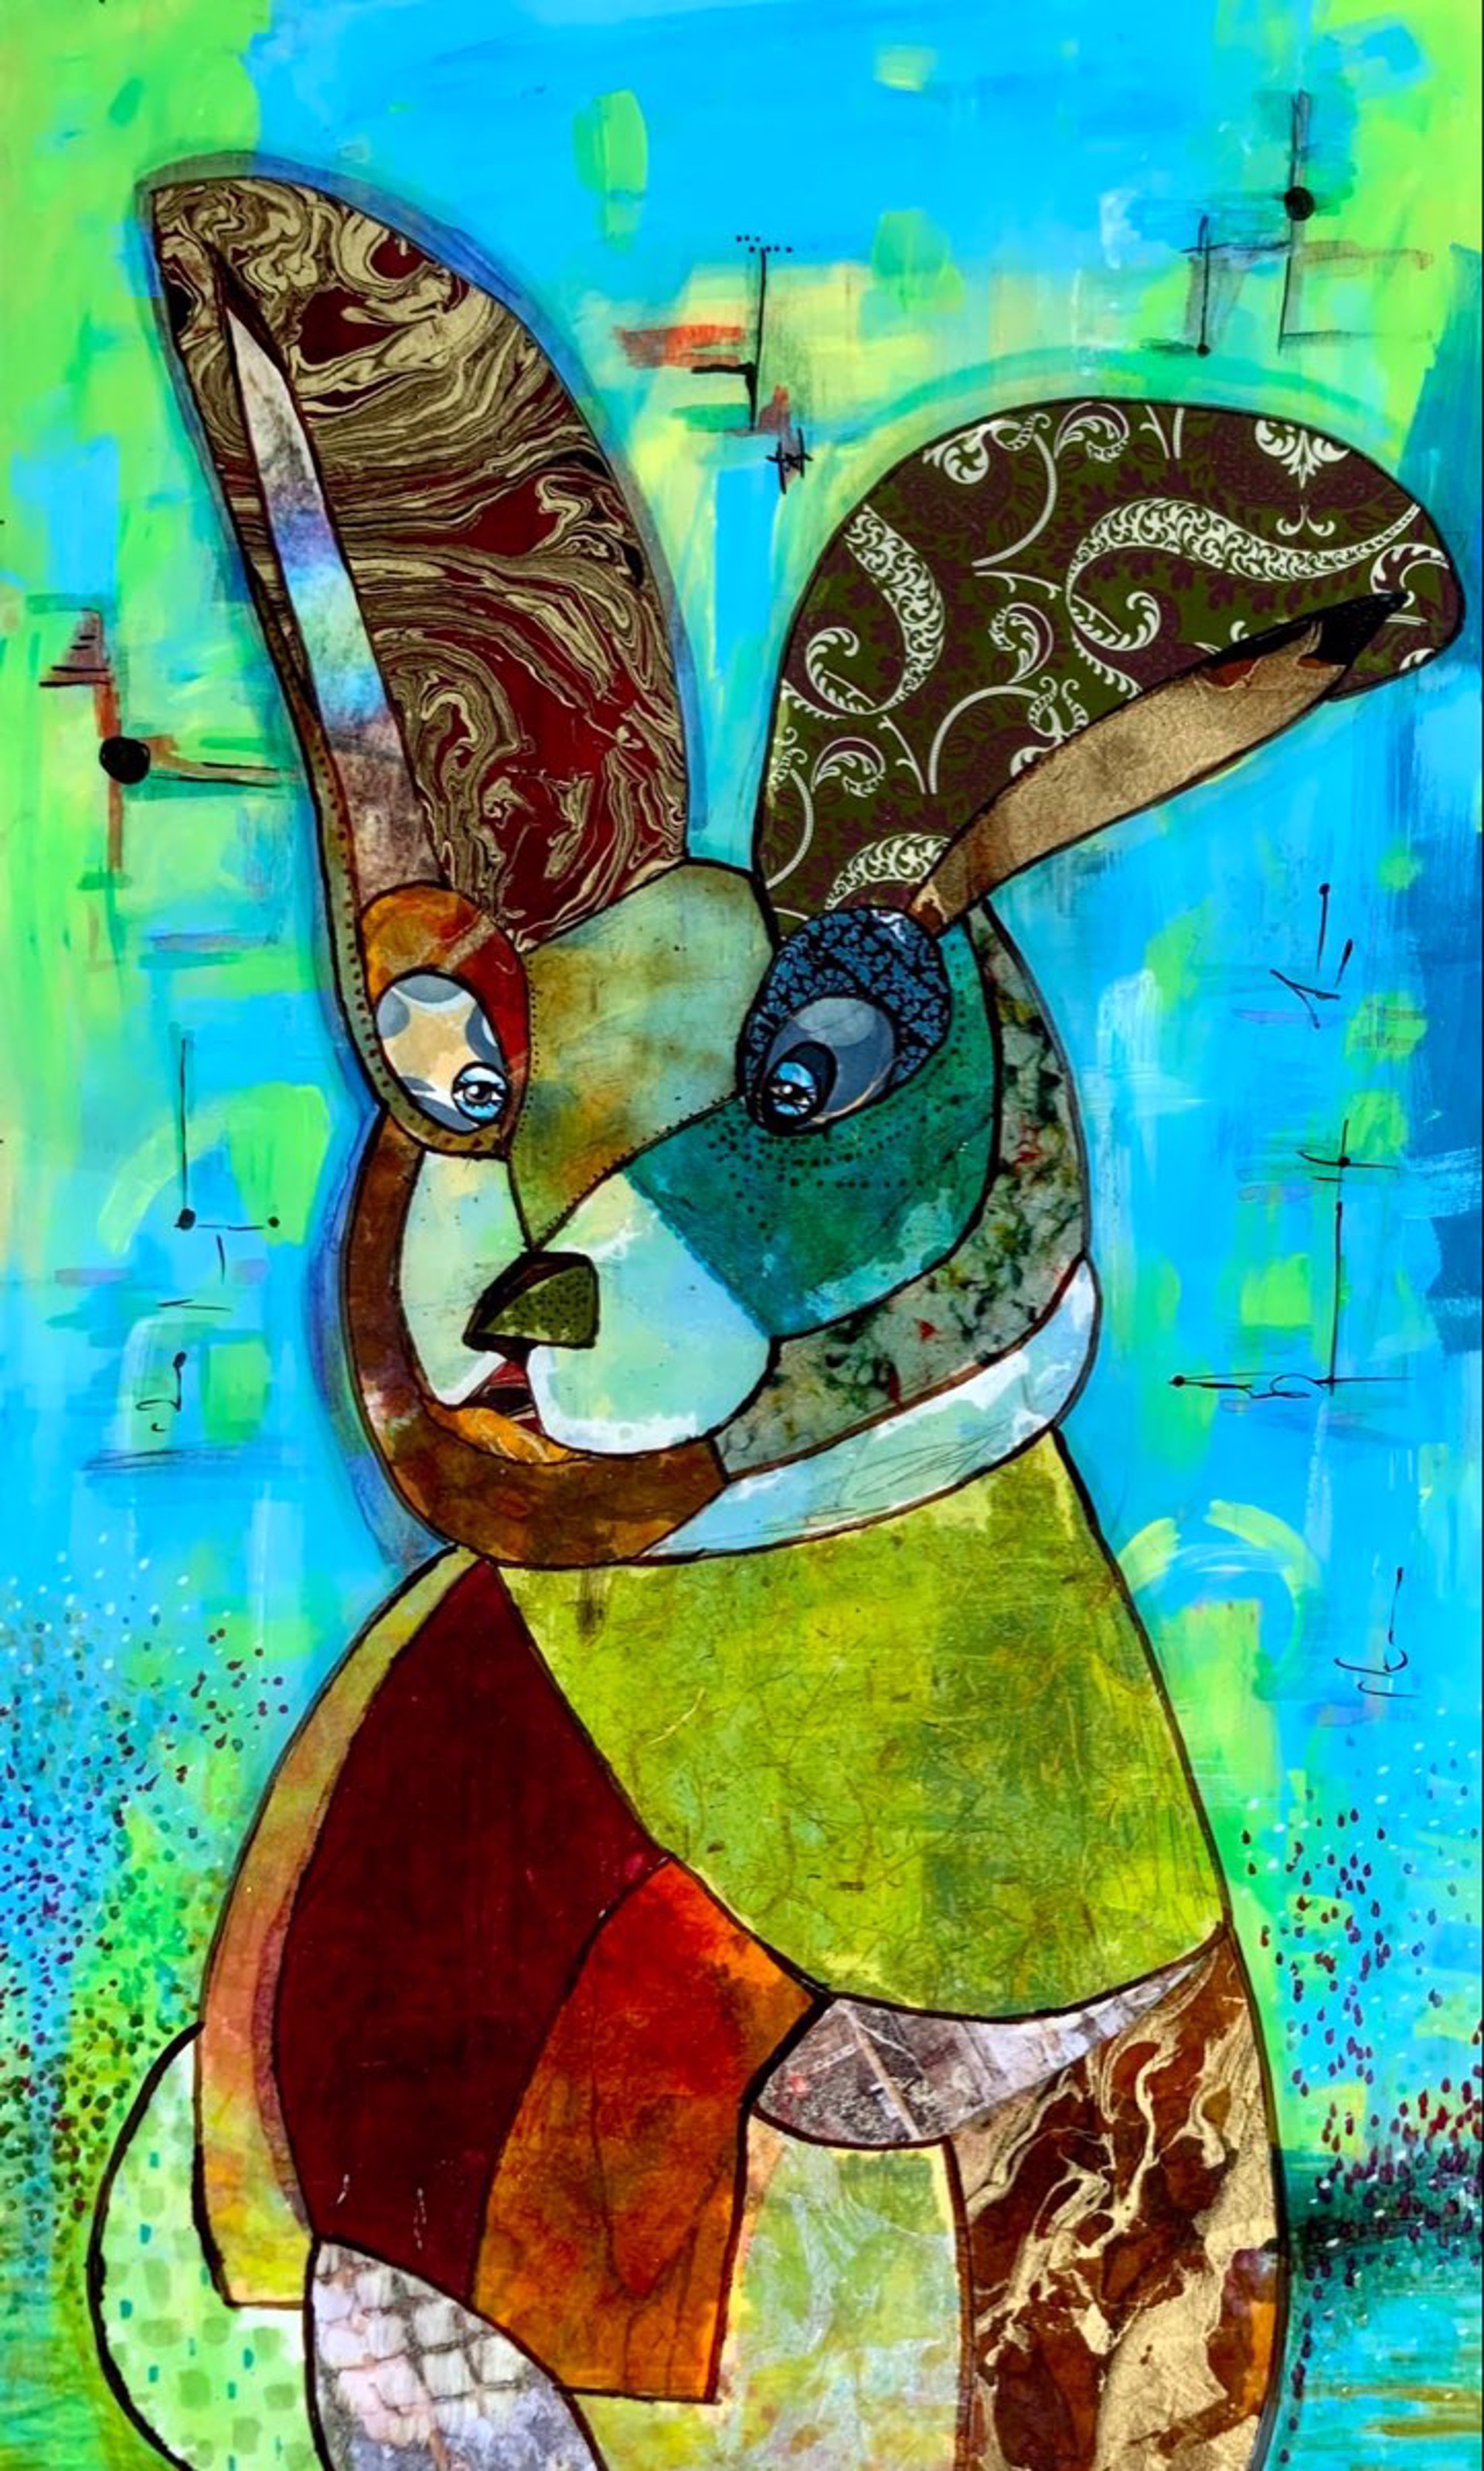 Big Bunny by Michelle Hamilton